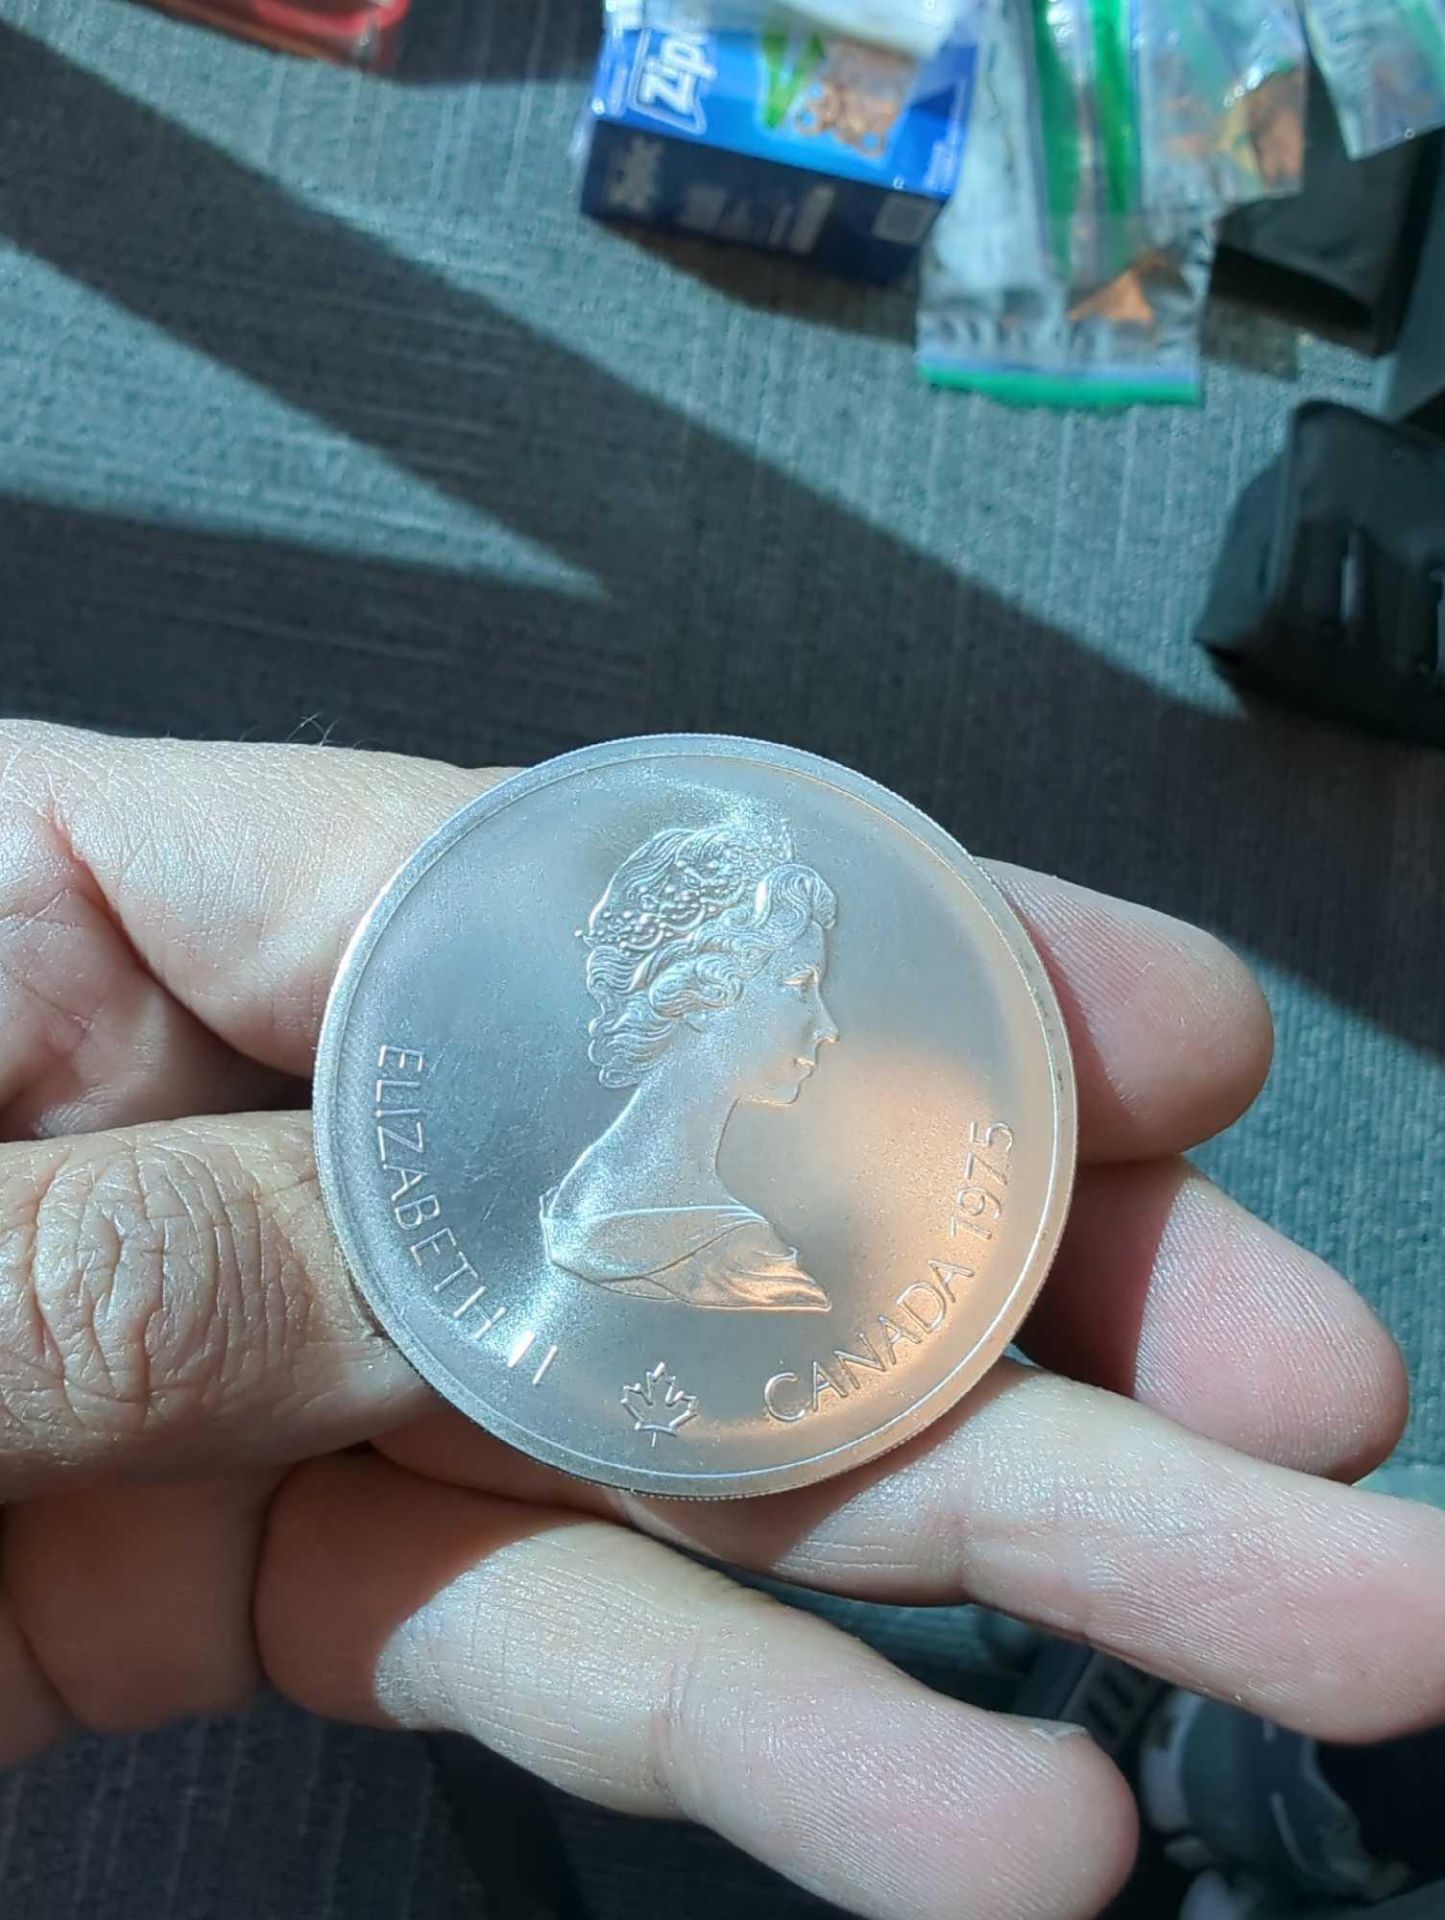 1975 Canada Queen Elizabeth Olympics Silver 10 Dollar Coin - Image 4 of 4